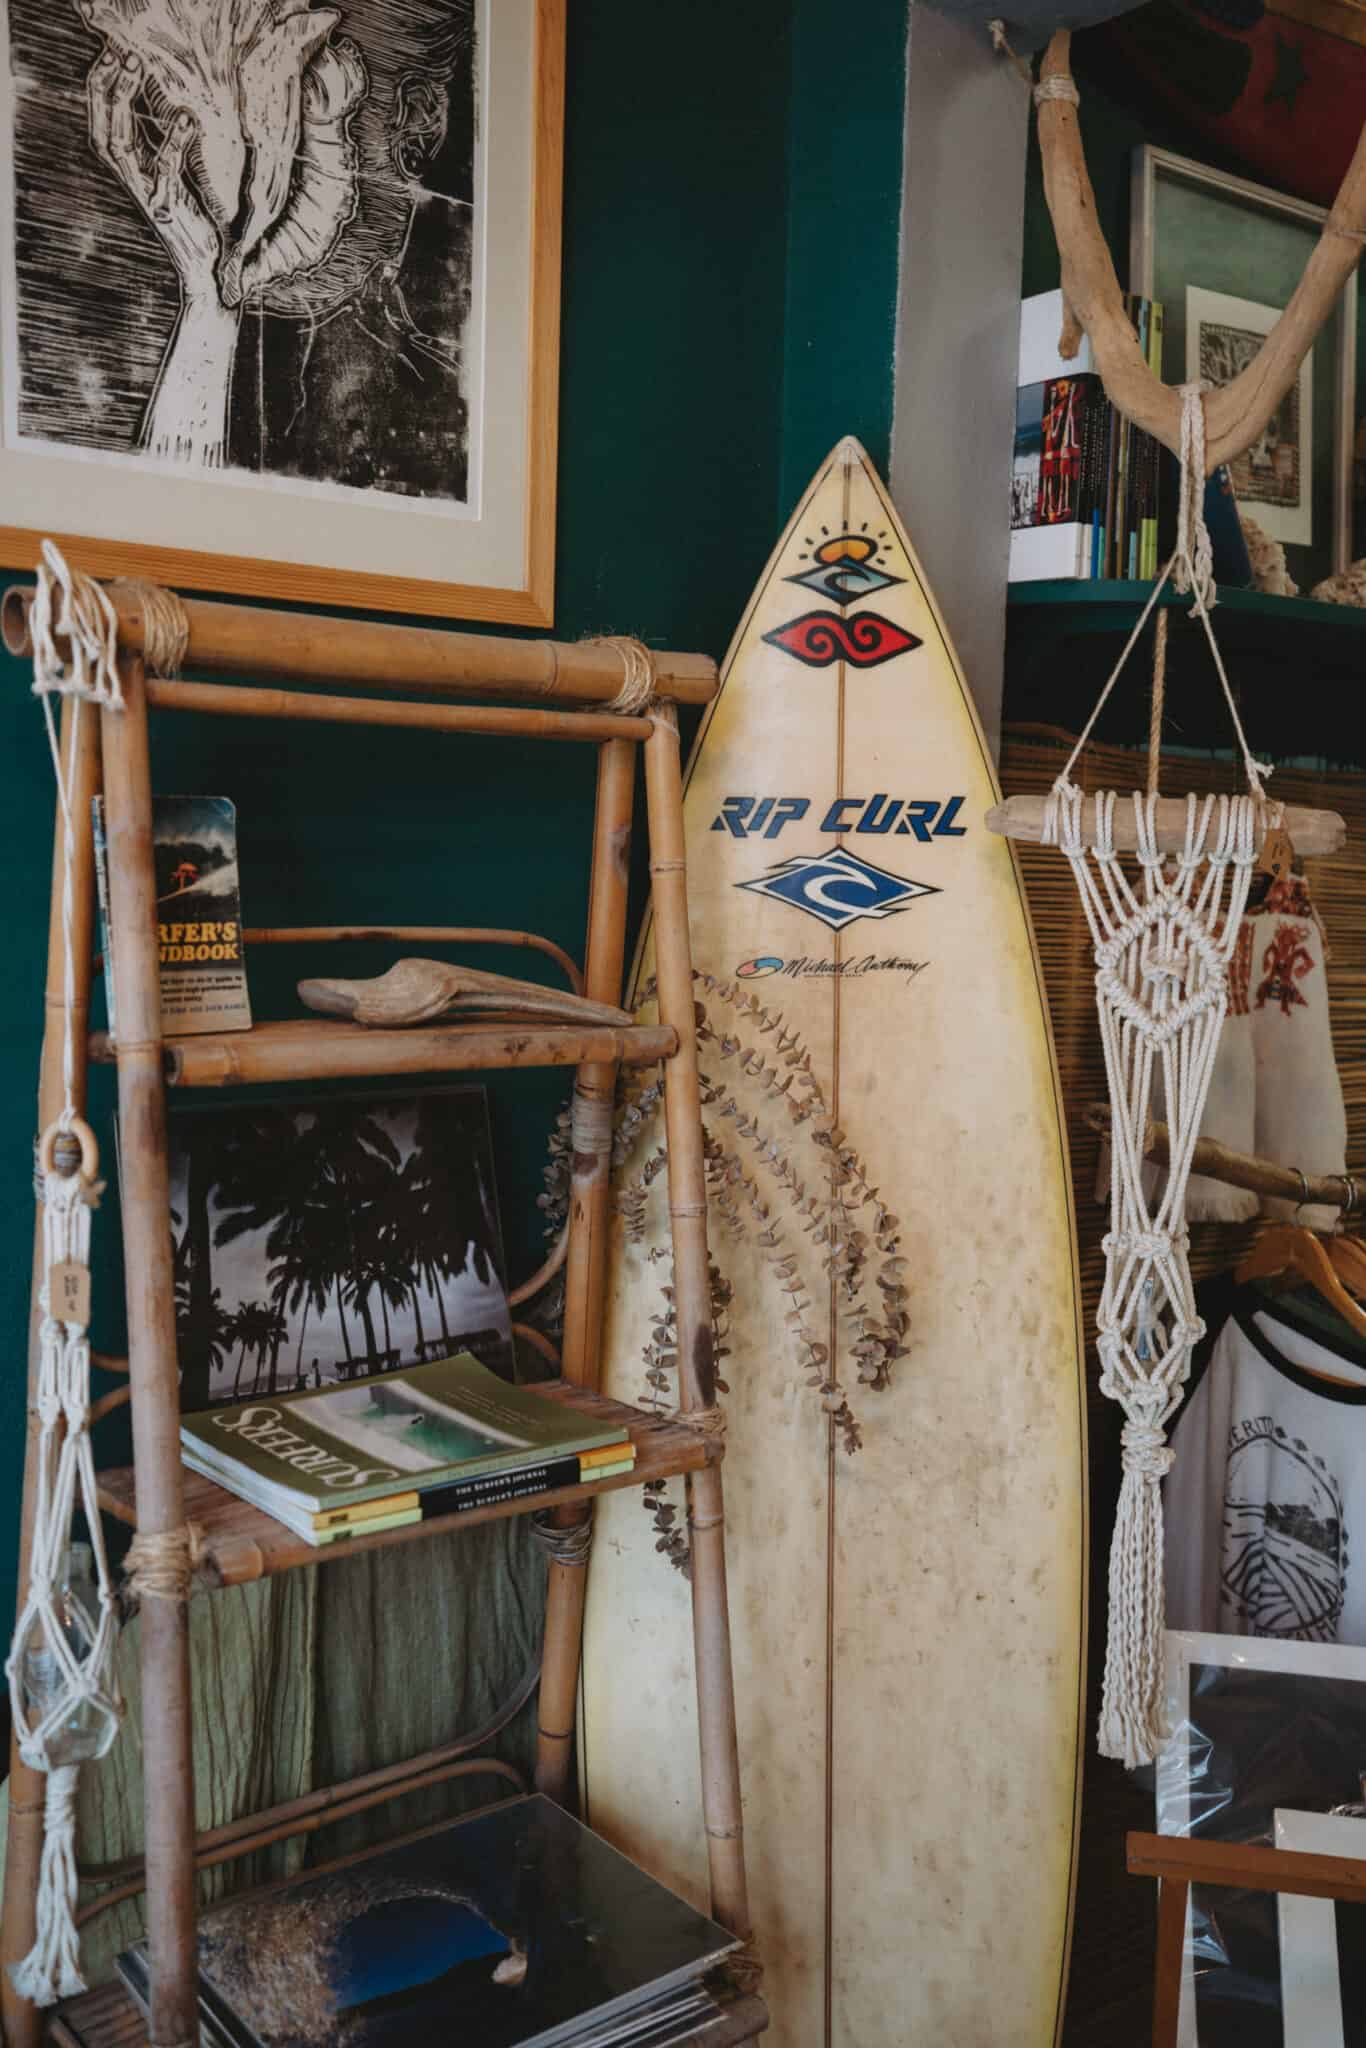 A surfboard is sitting on a shelf in a Sayulita room.